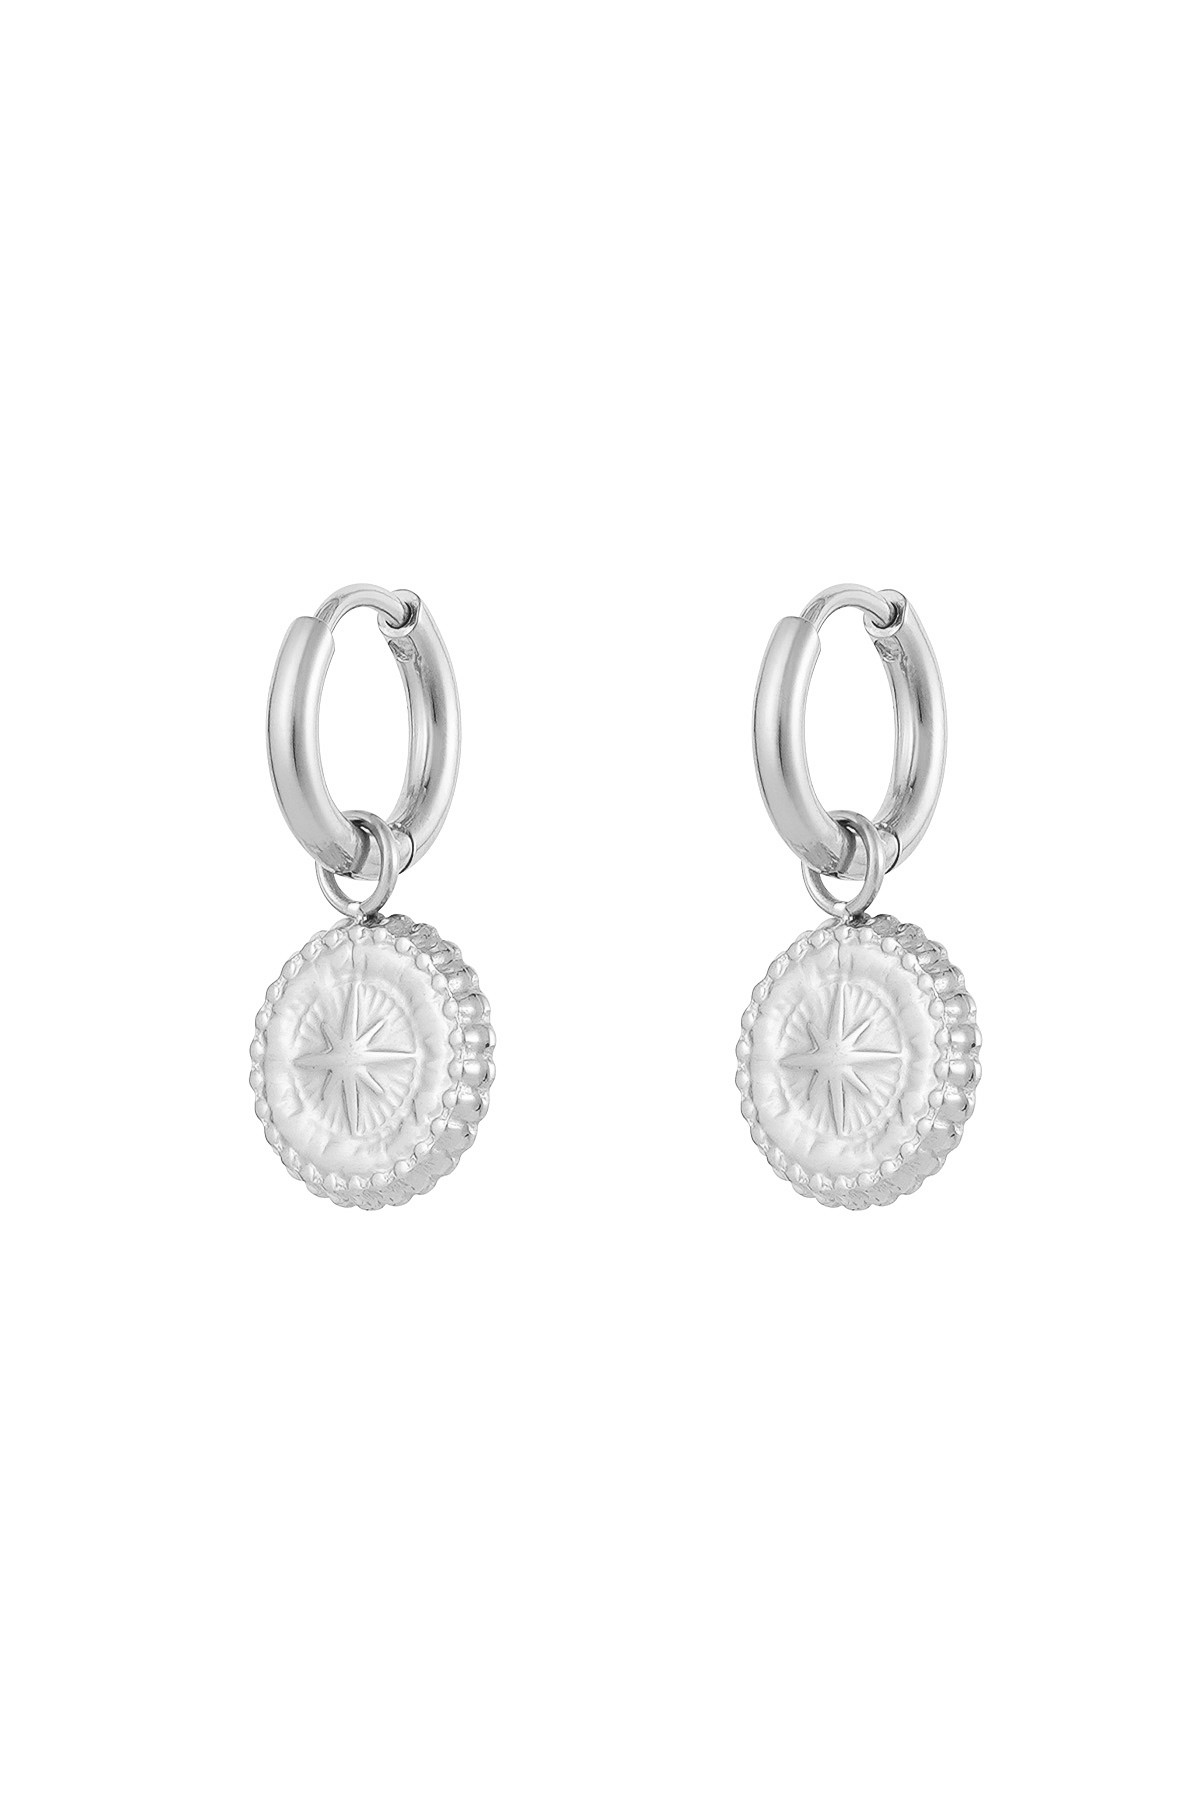 Earrings star coin - silver h5 